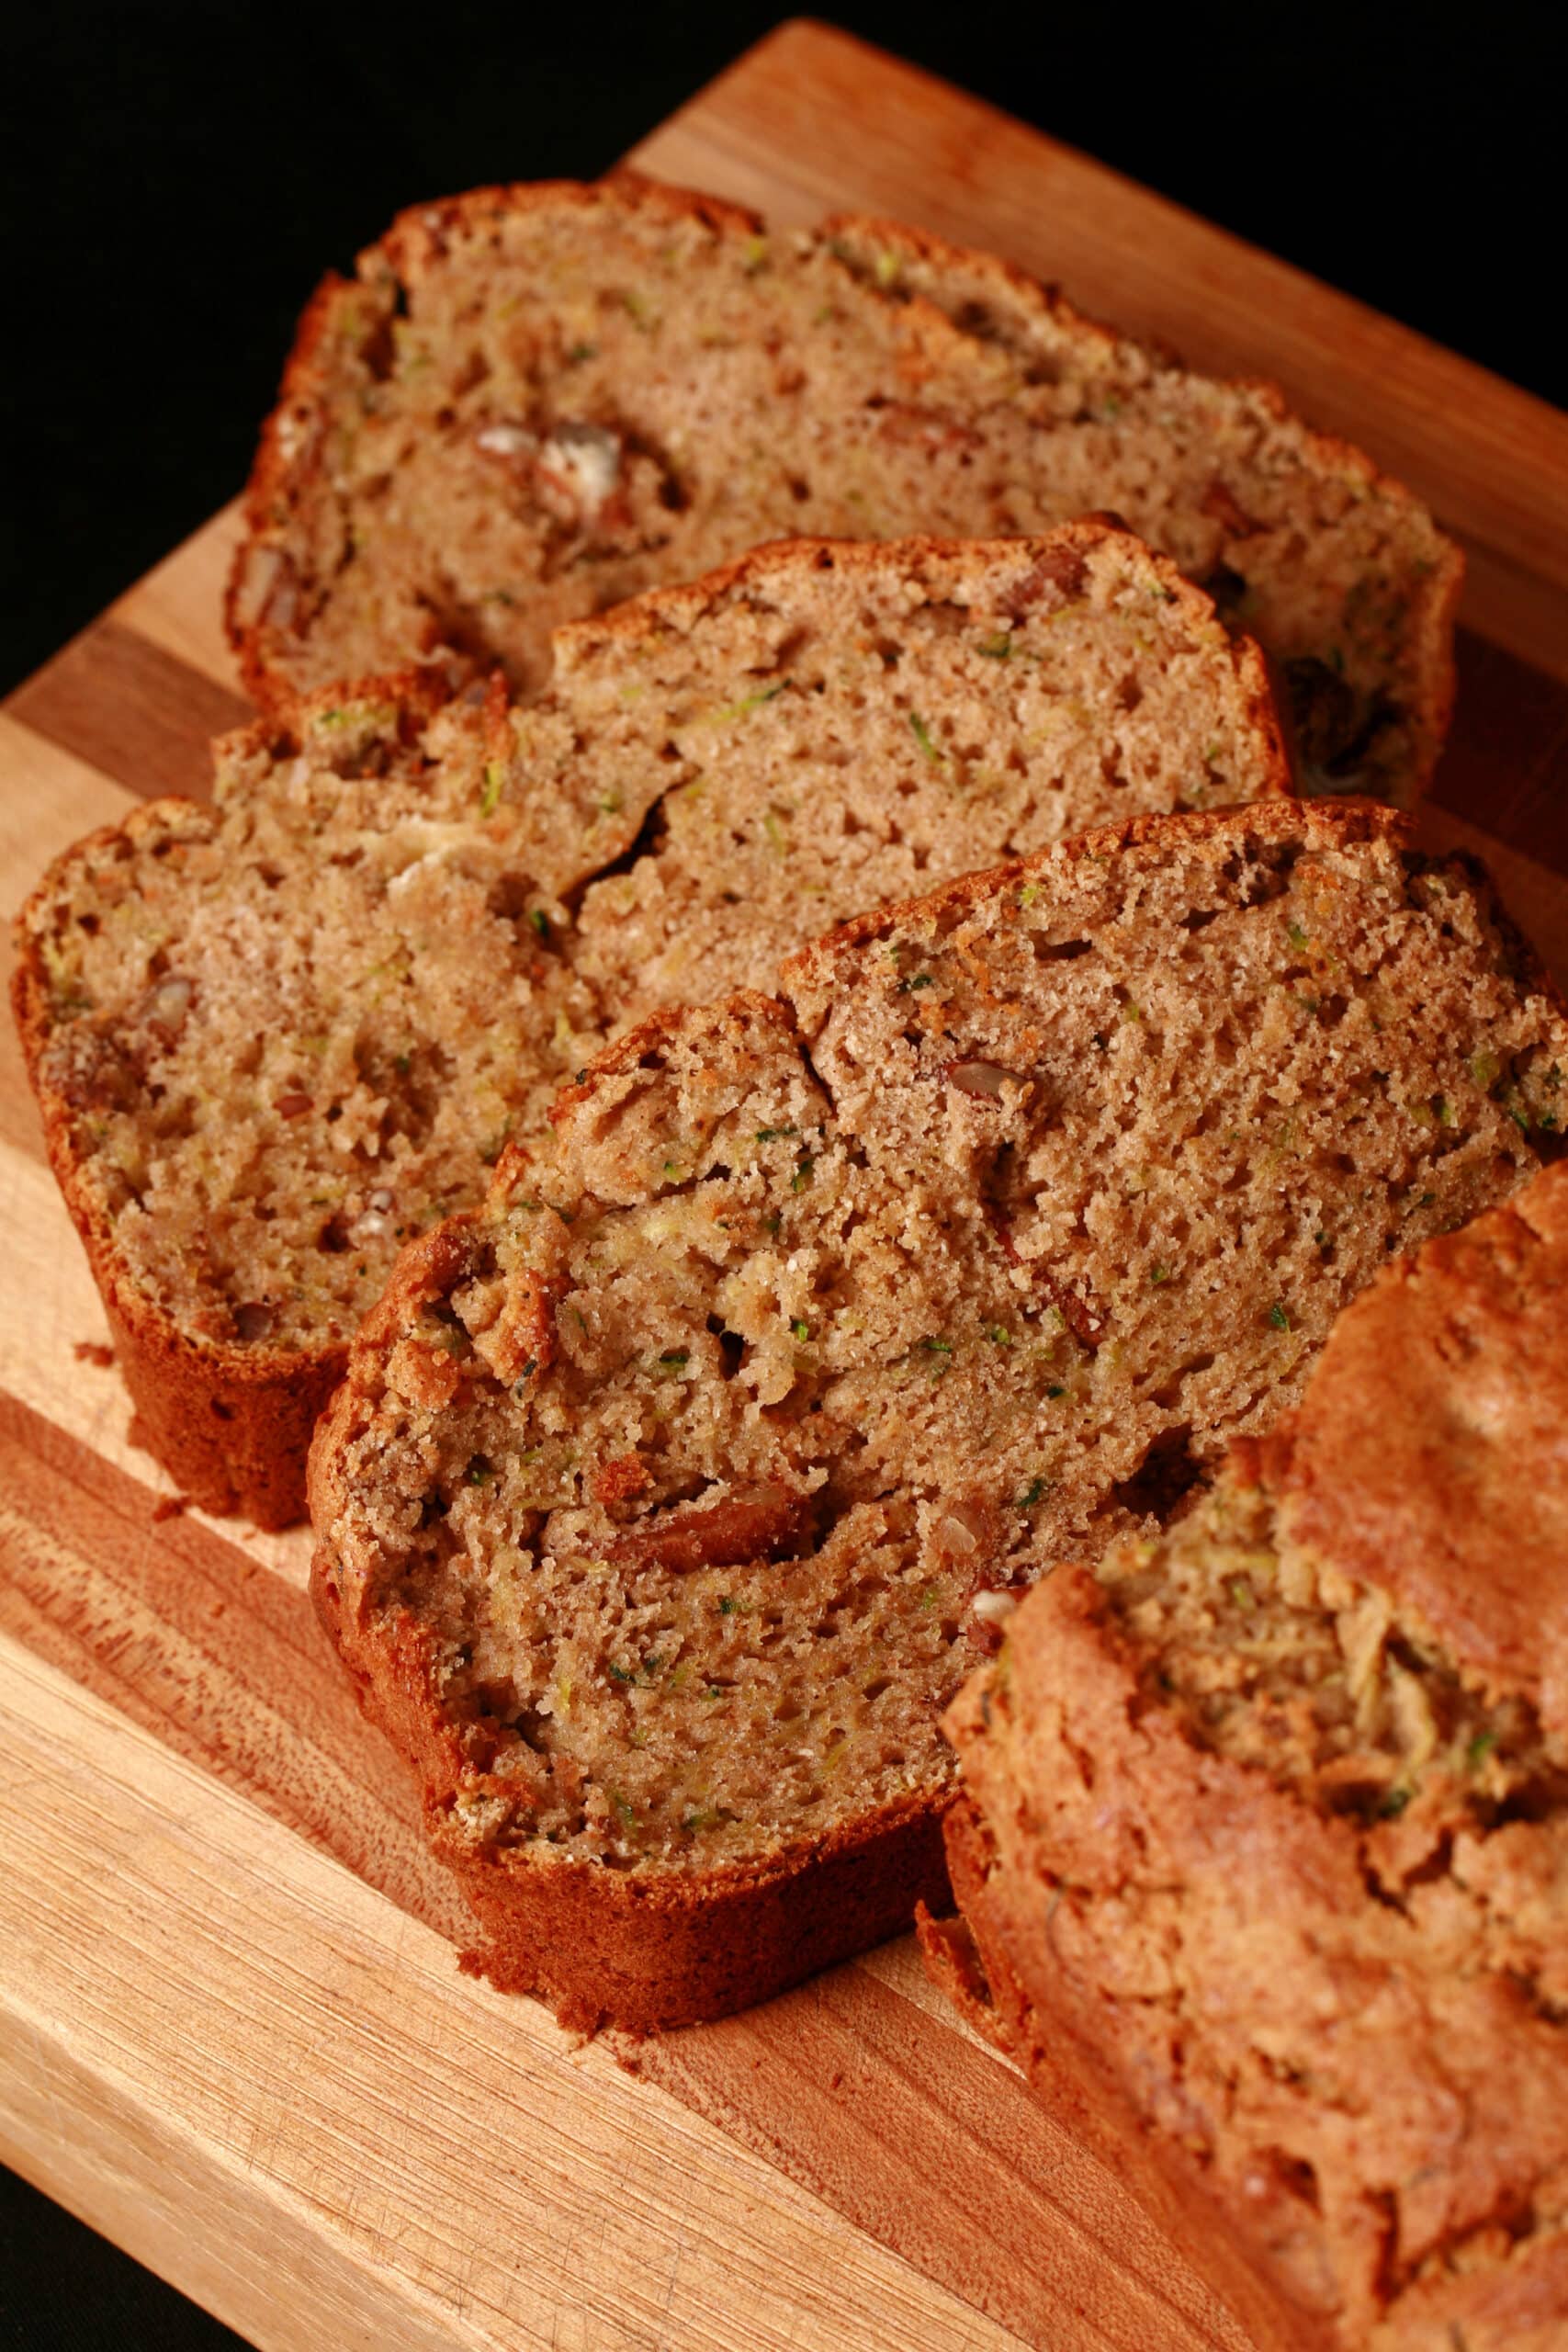 A sliced loaf of gluten free zucchini bread on a wooden cutting board.